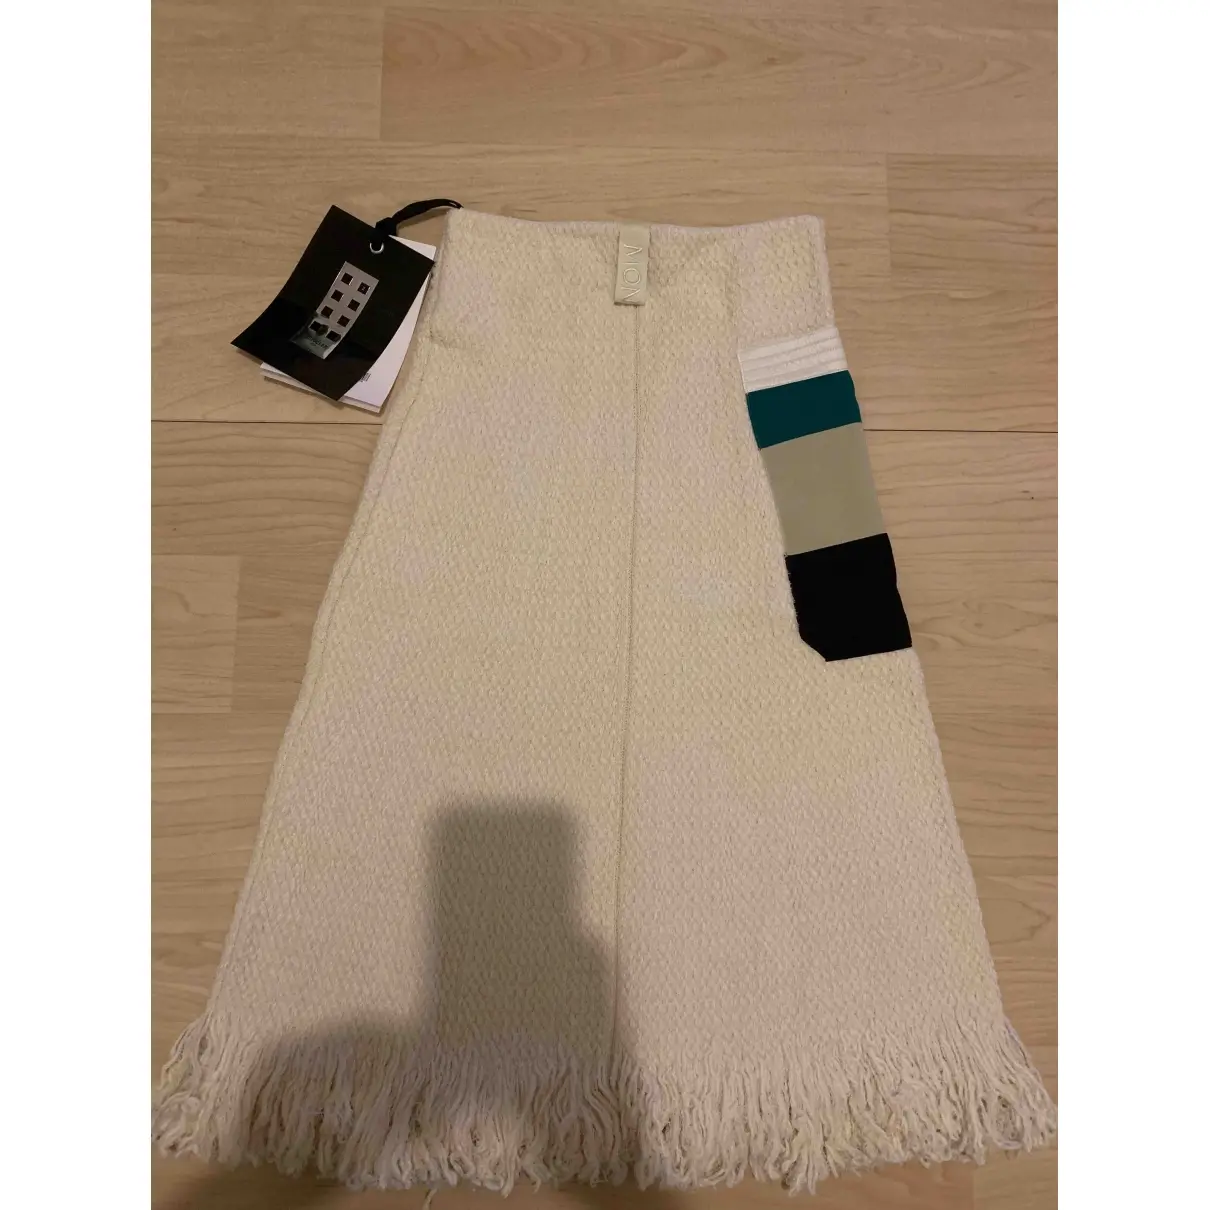 Moncler Genius Mid-length skirt for sale